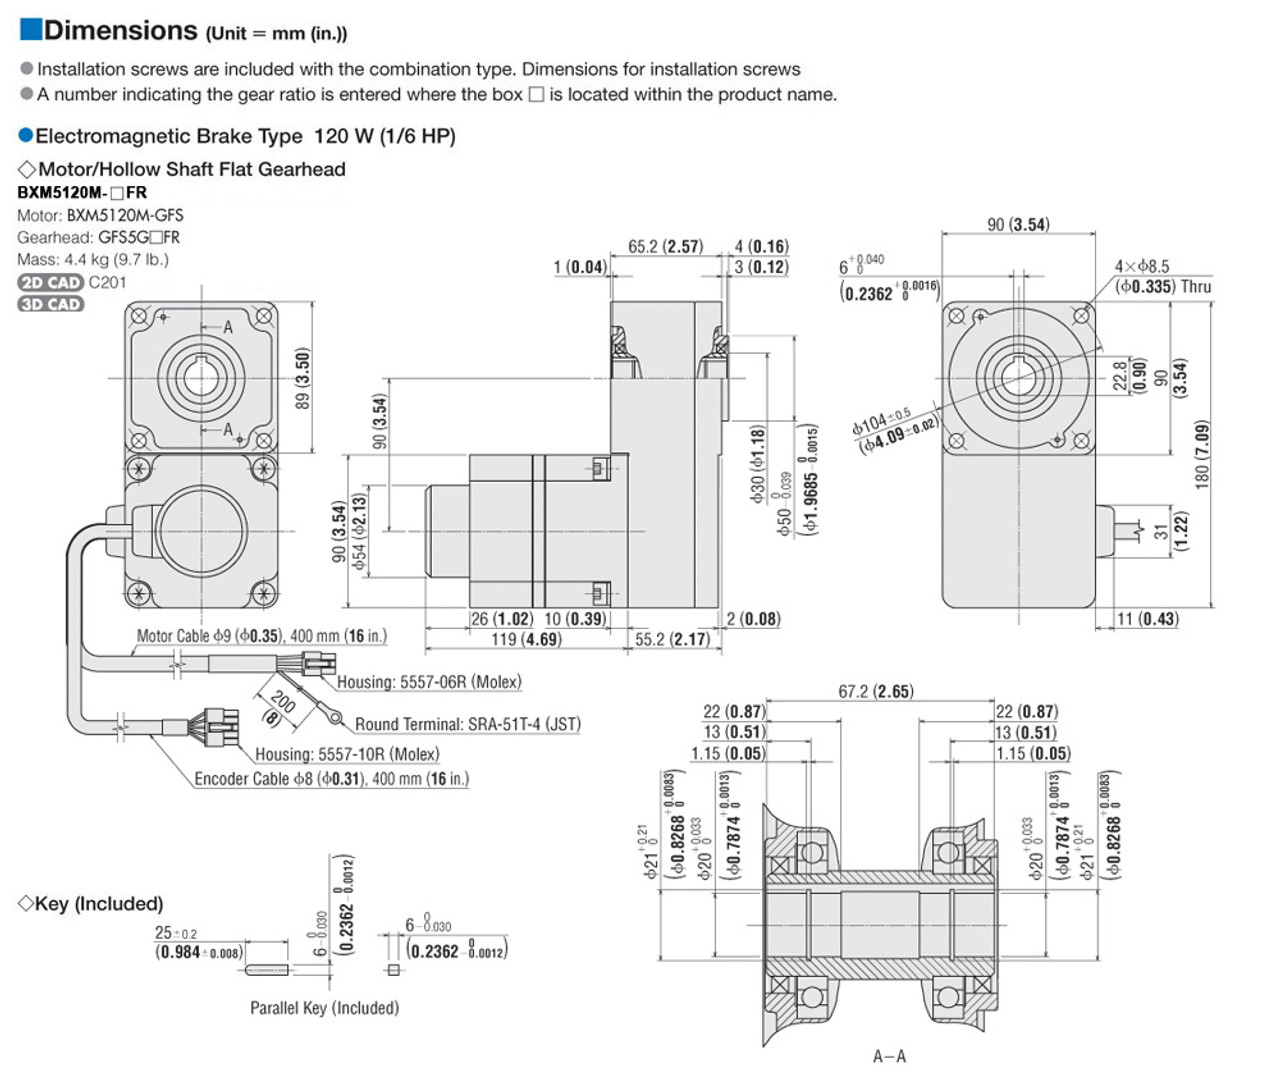 BXM5120M-15FR / BXSD120-A2 - Dimensions